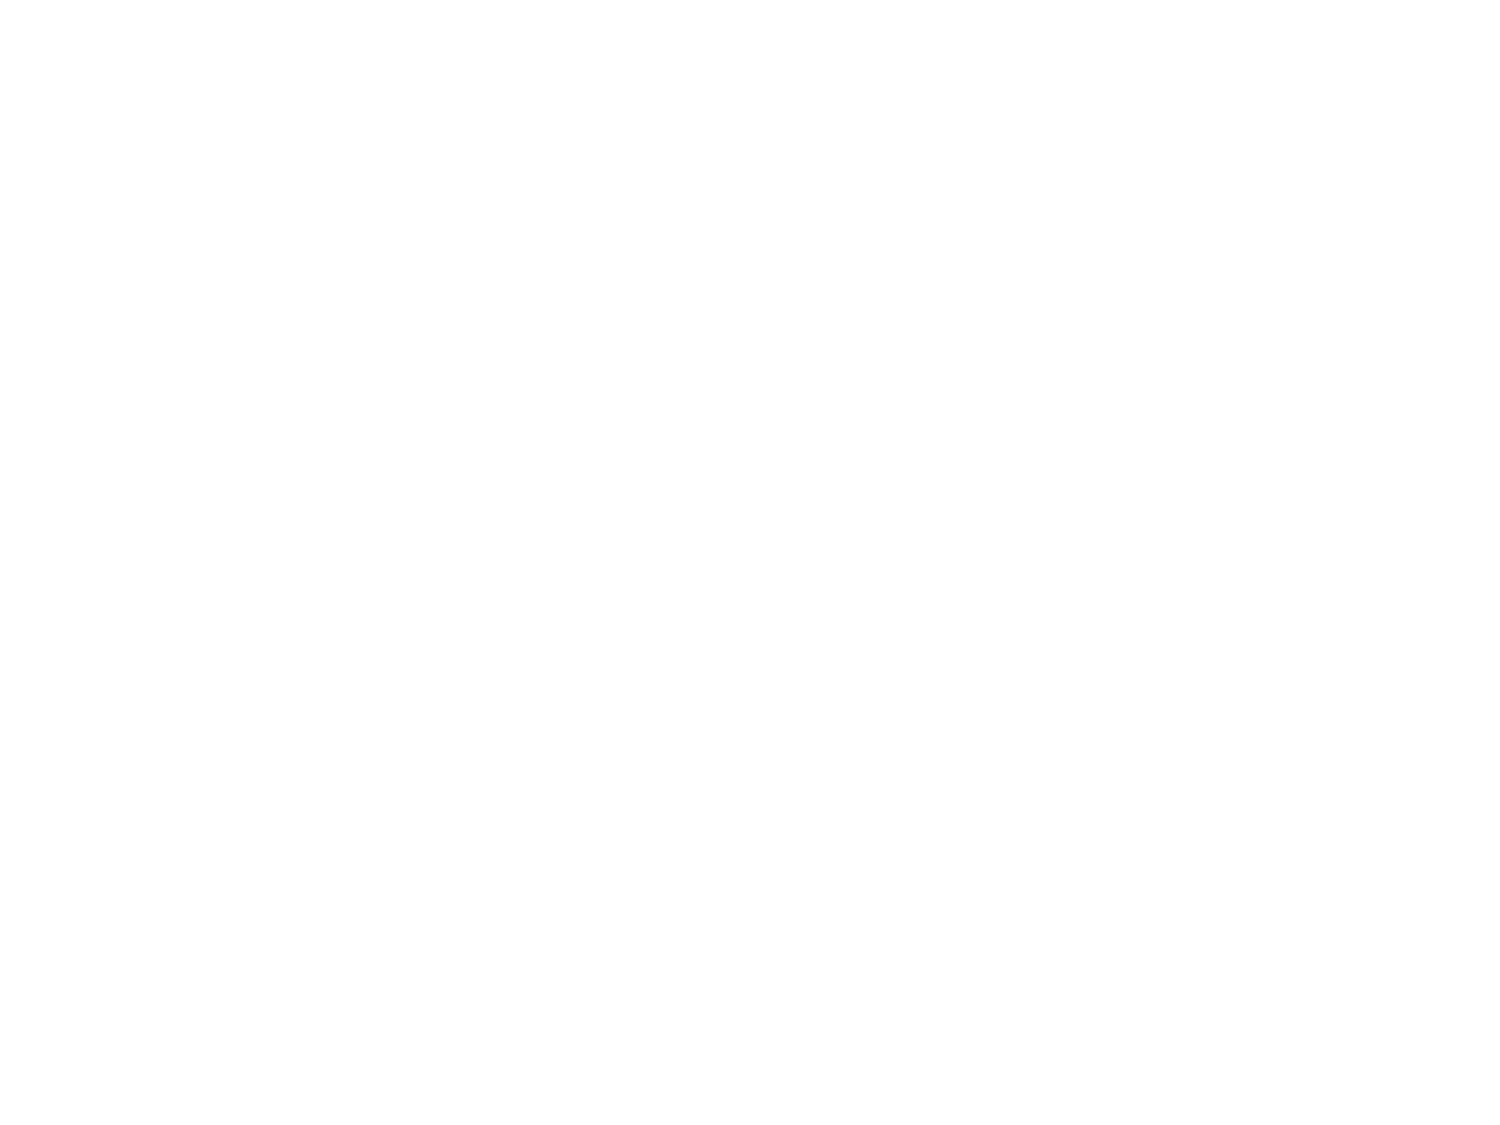 Davis for State Representative